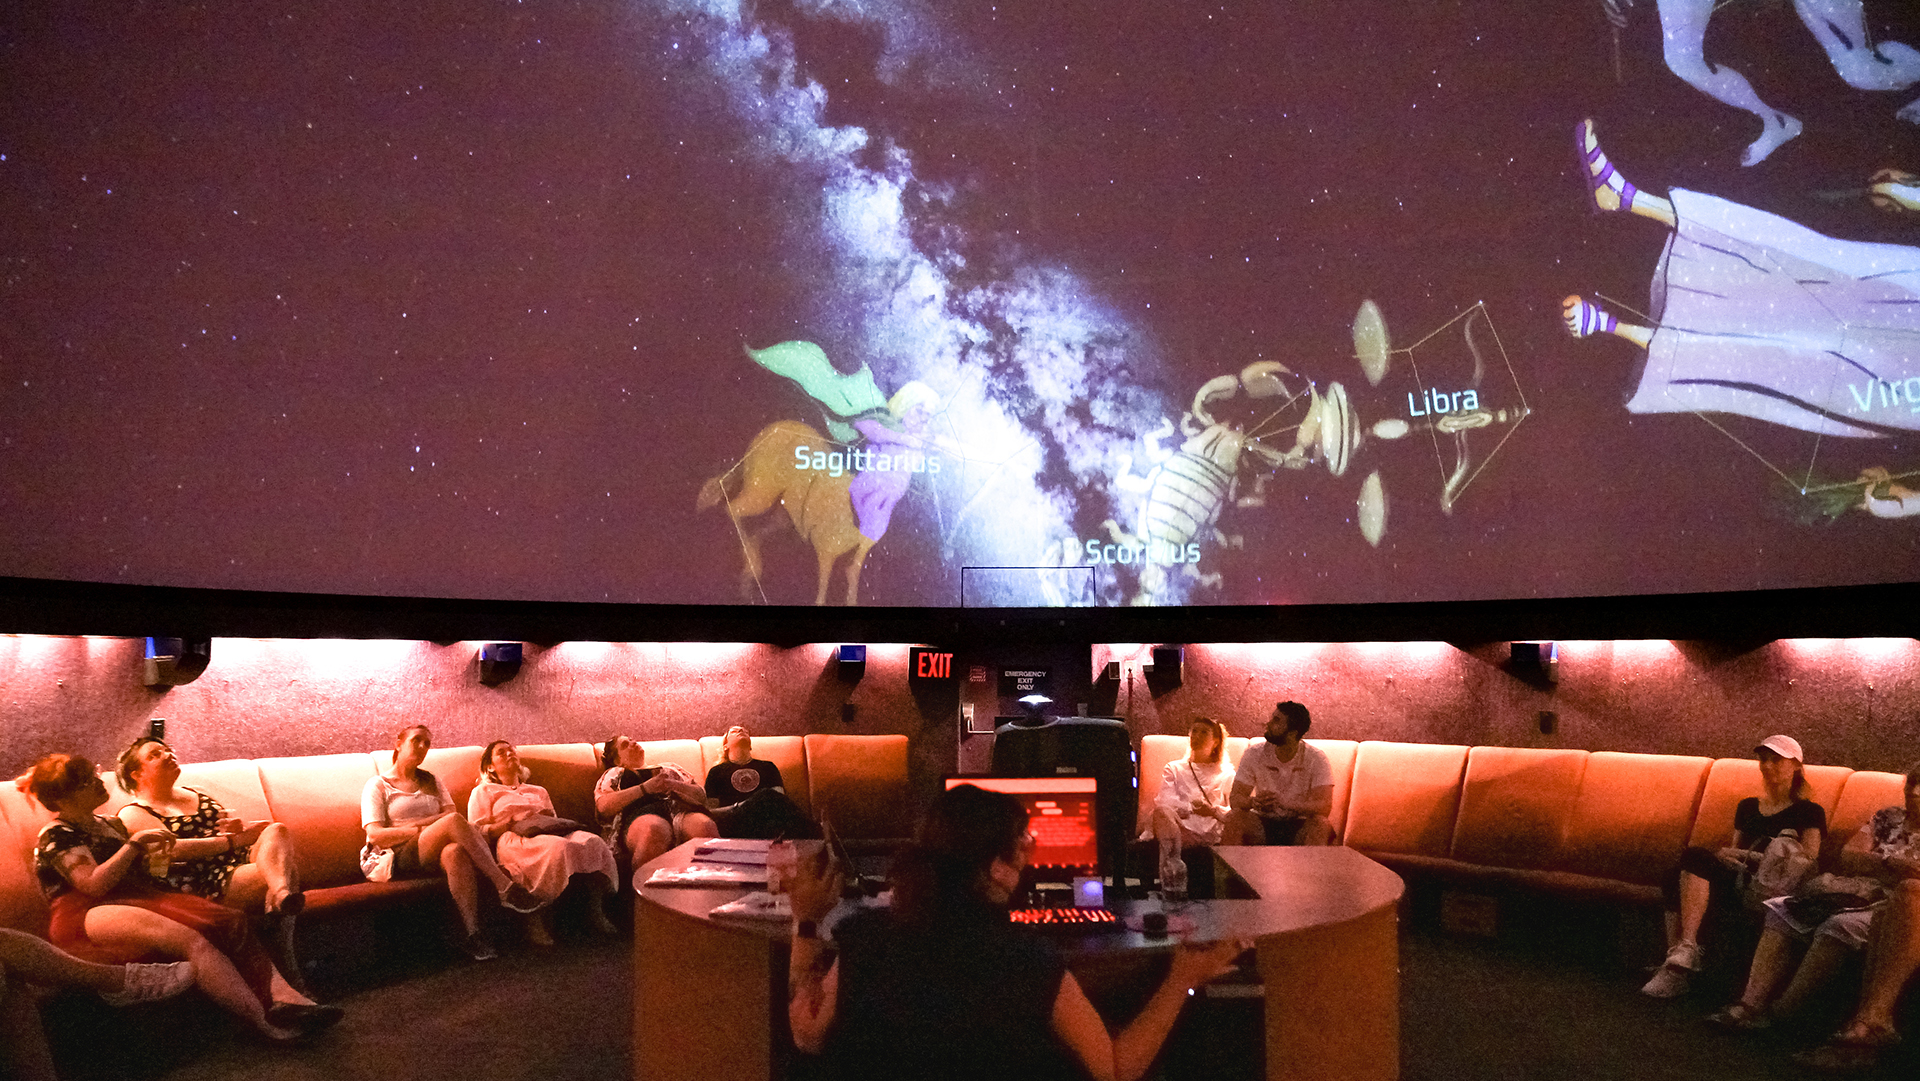 Guests attend a planetarium show